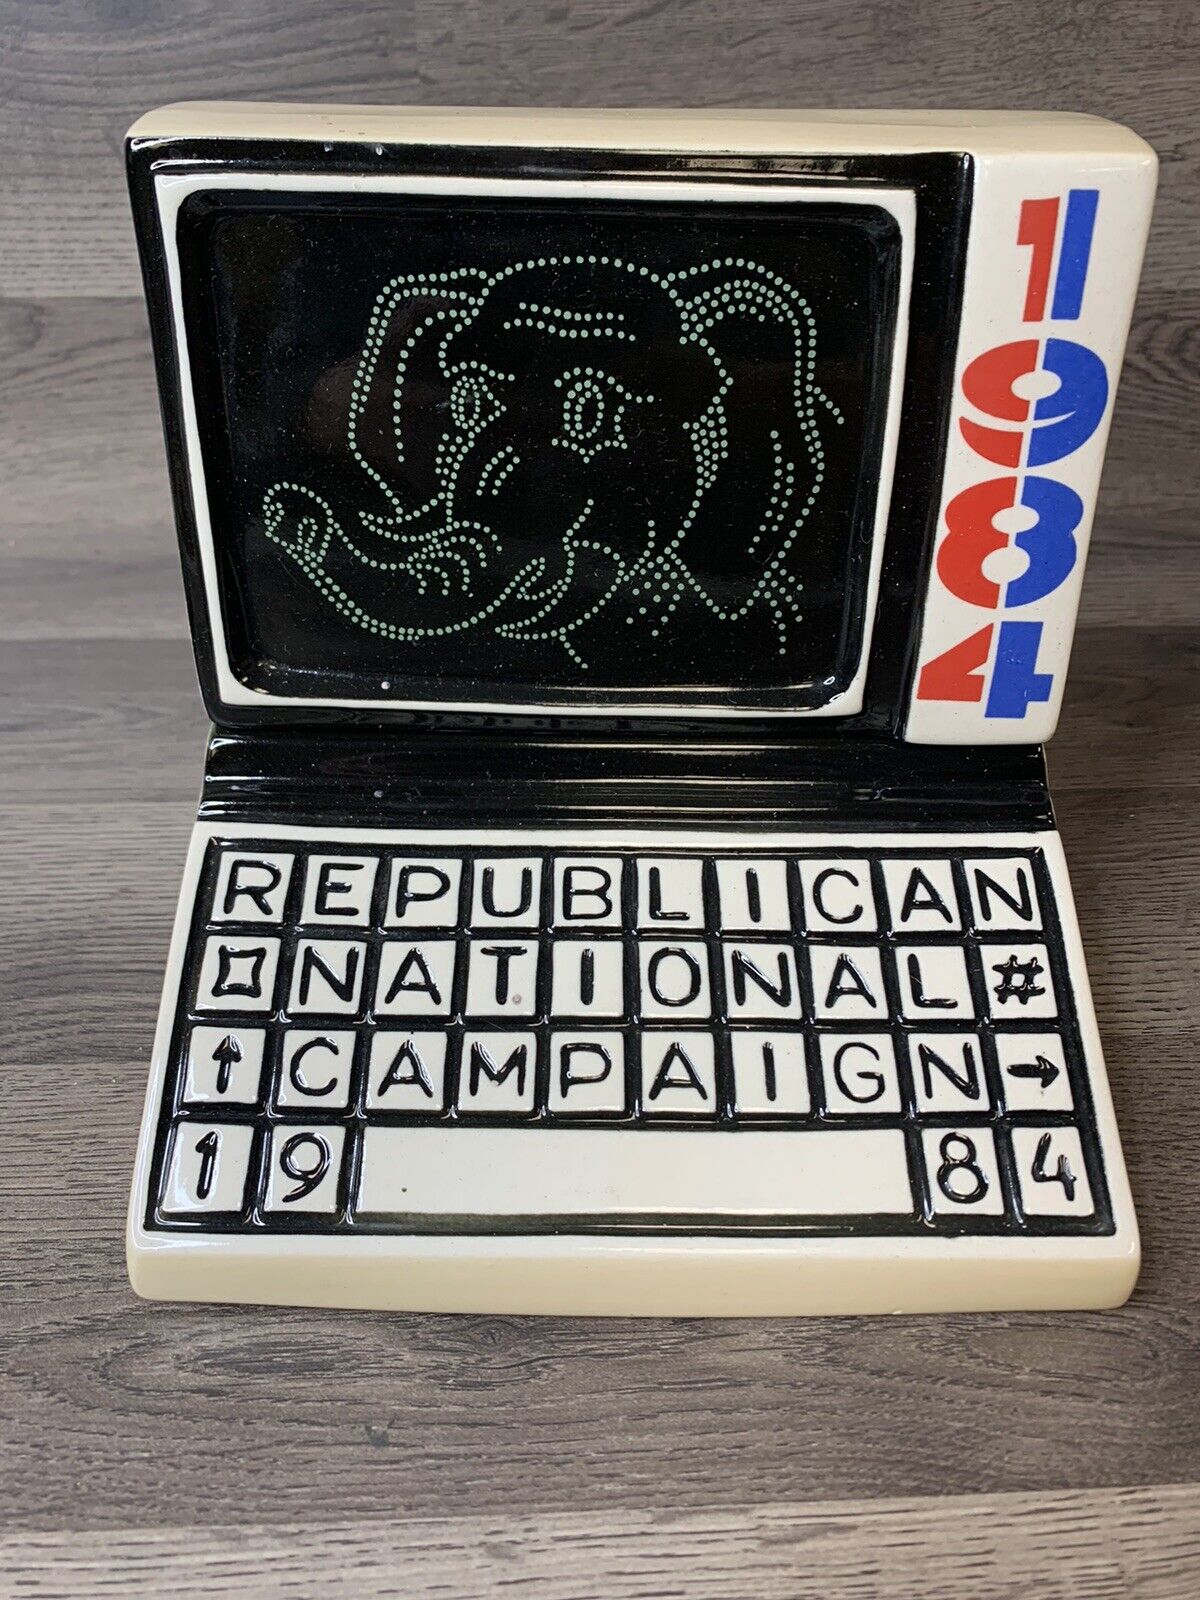 Vintage 1984 Republican National Campaign Jim Beam Computer Decanter